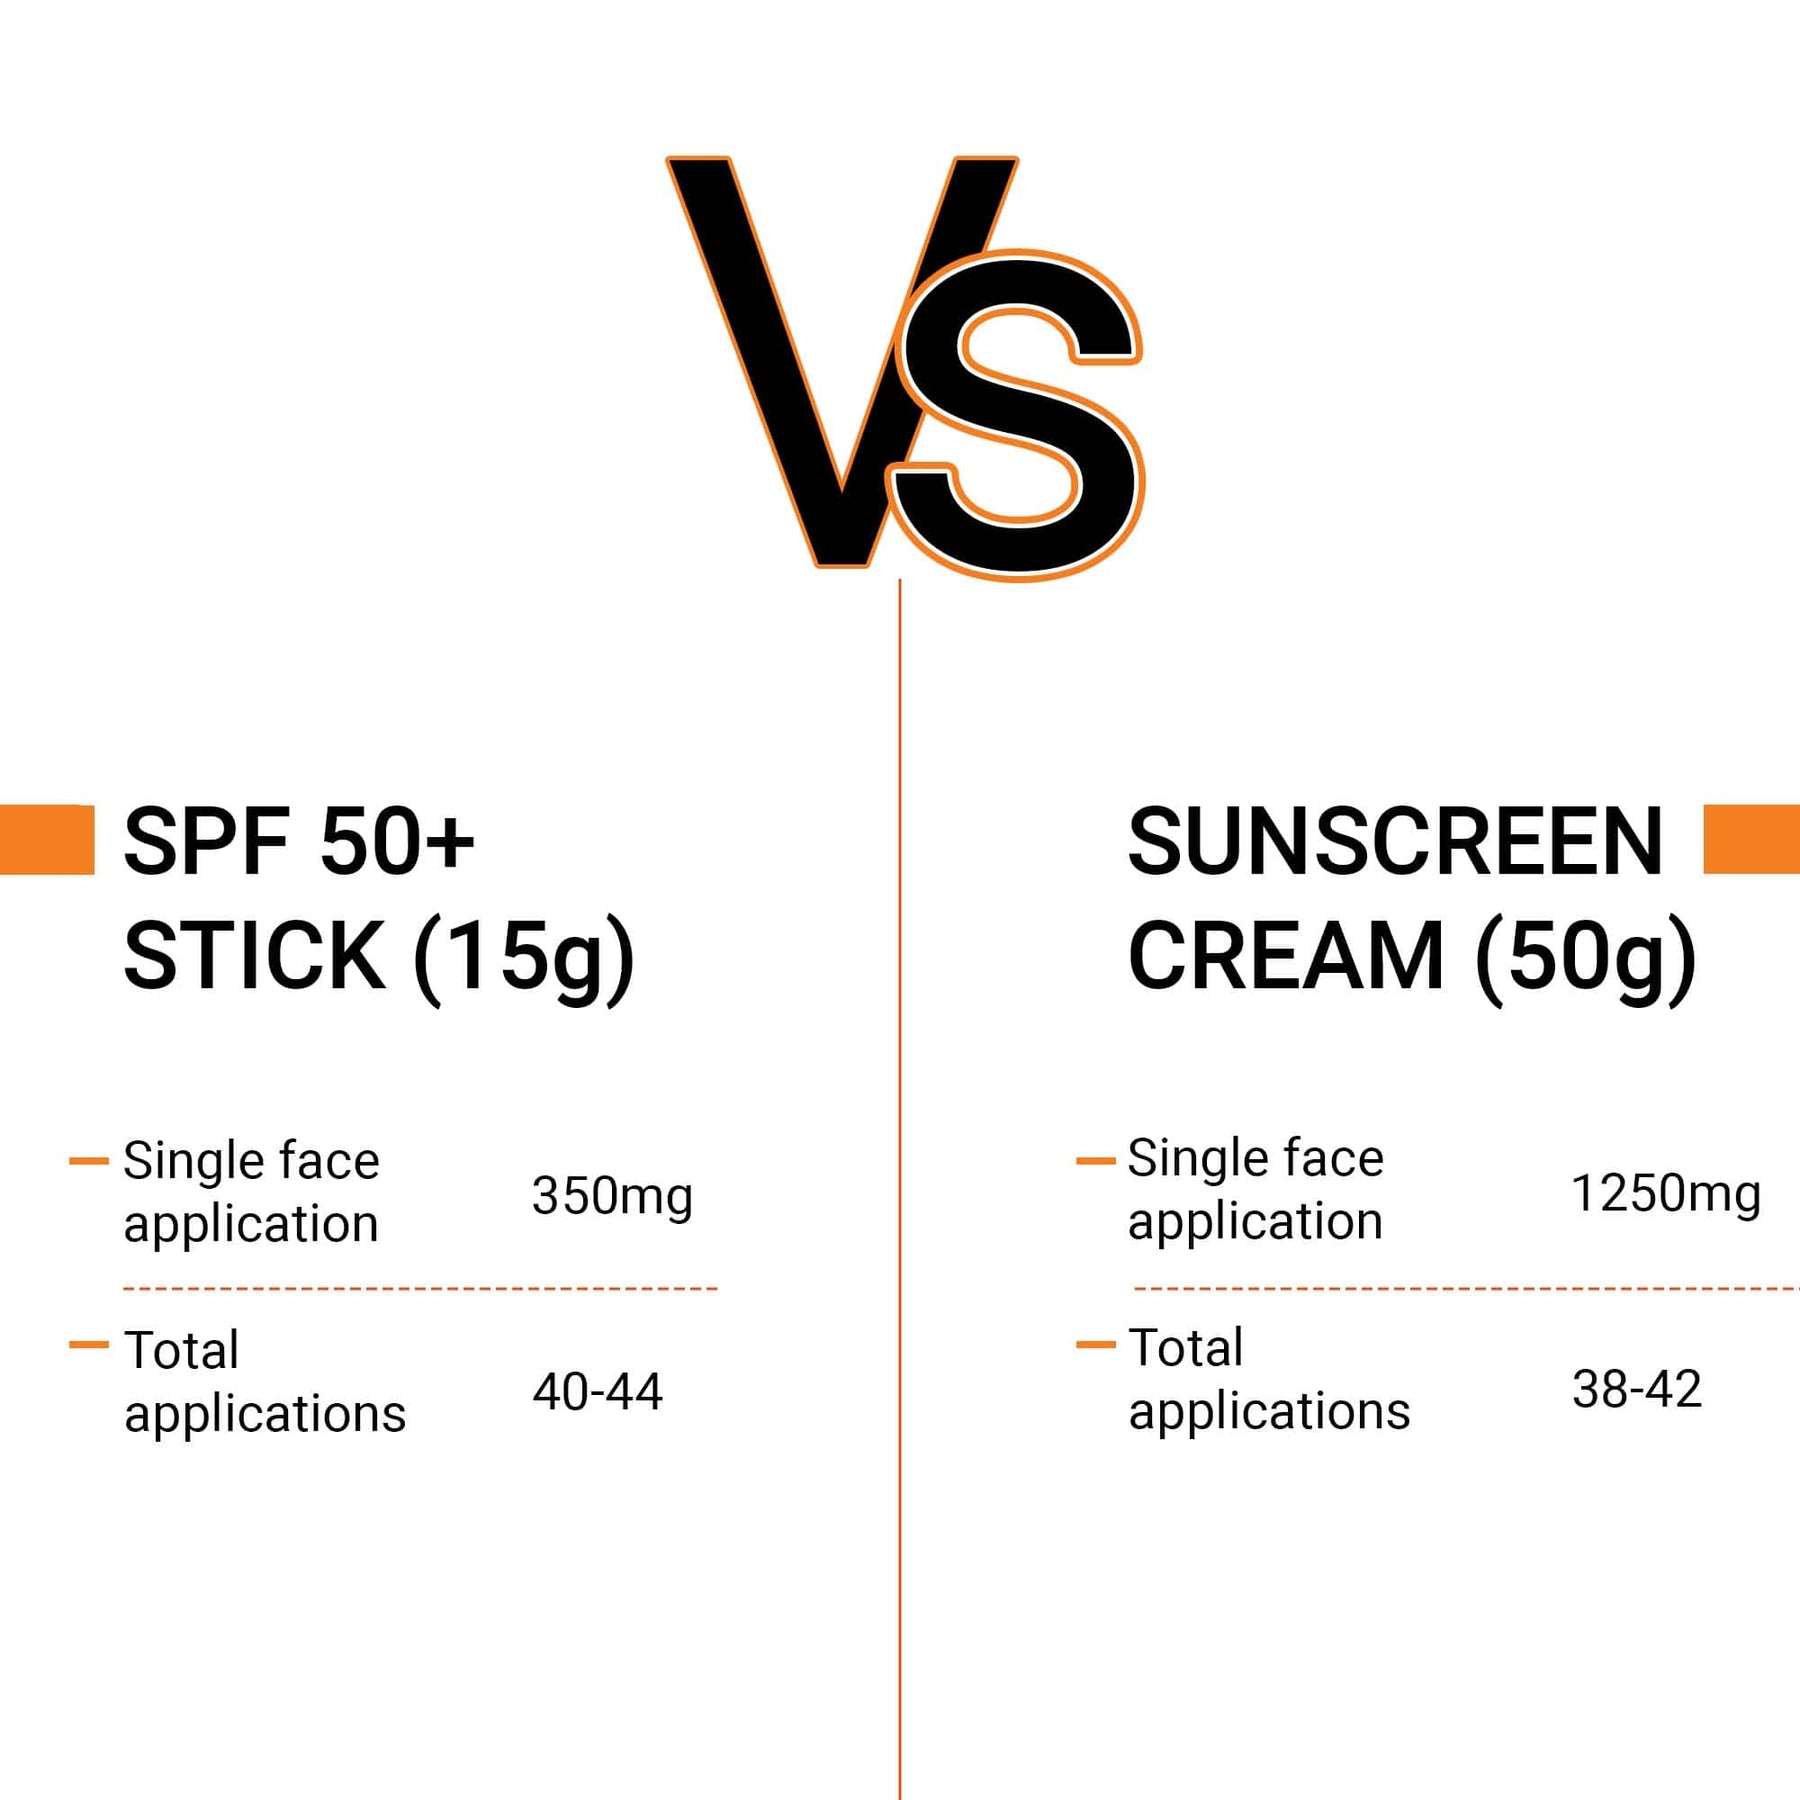 Buy Australian Gold Face Guard Sunscreen Stick SPF50 14g · India